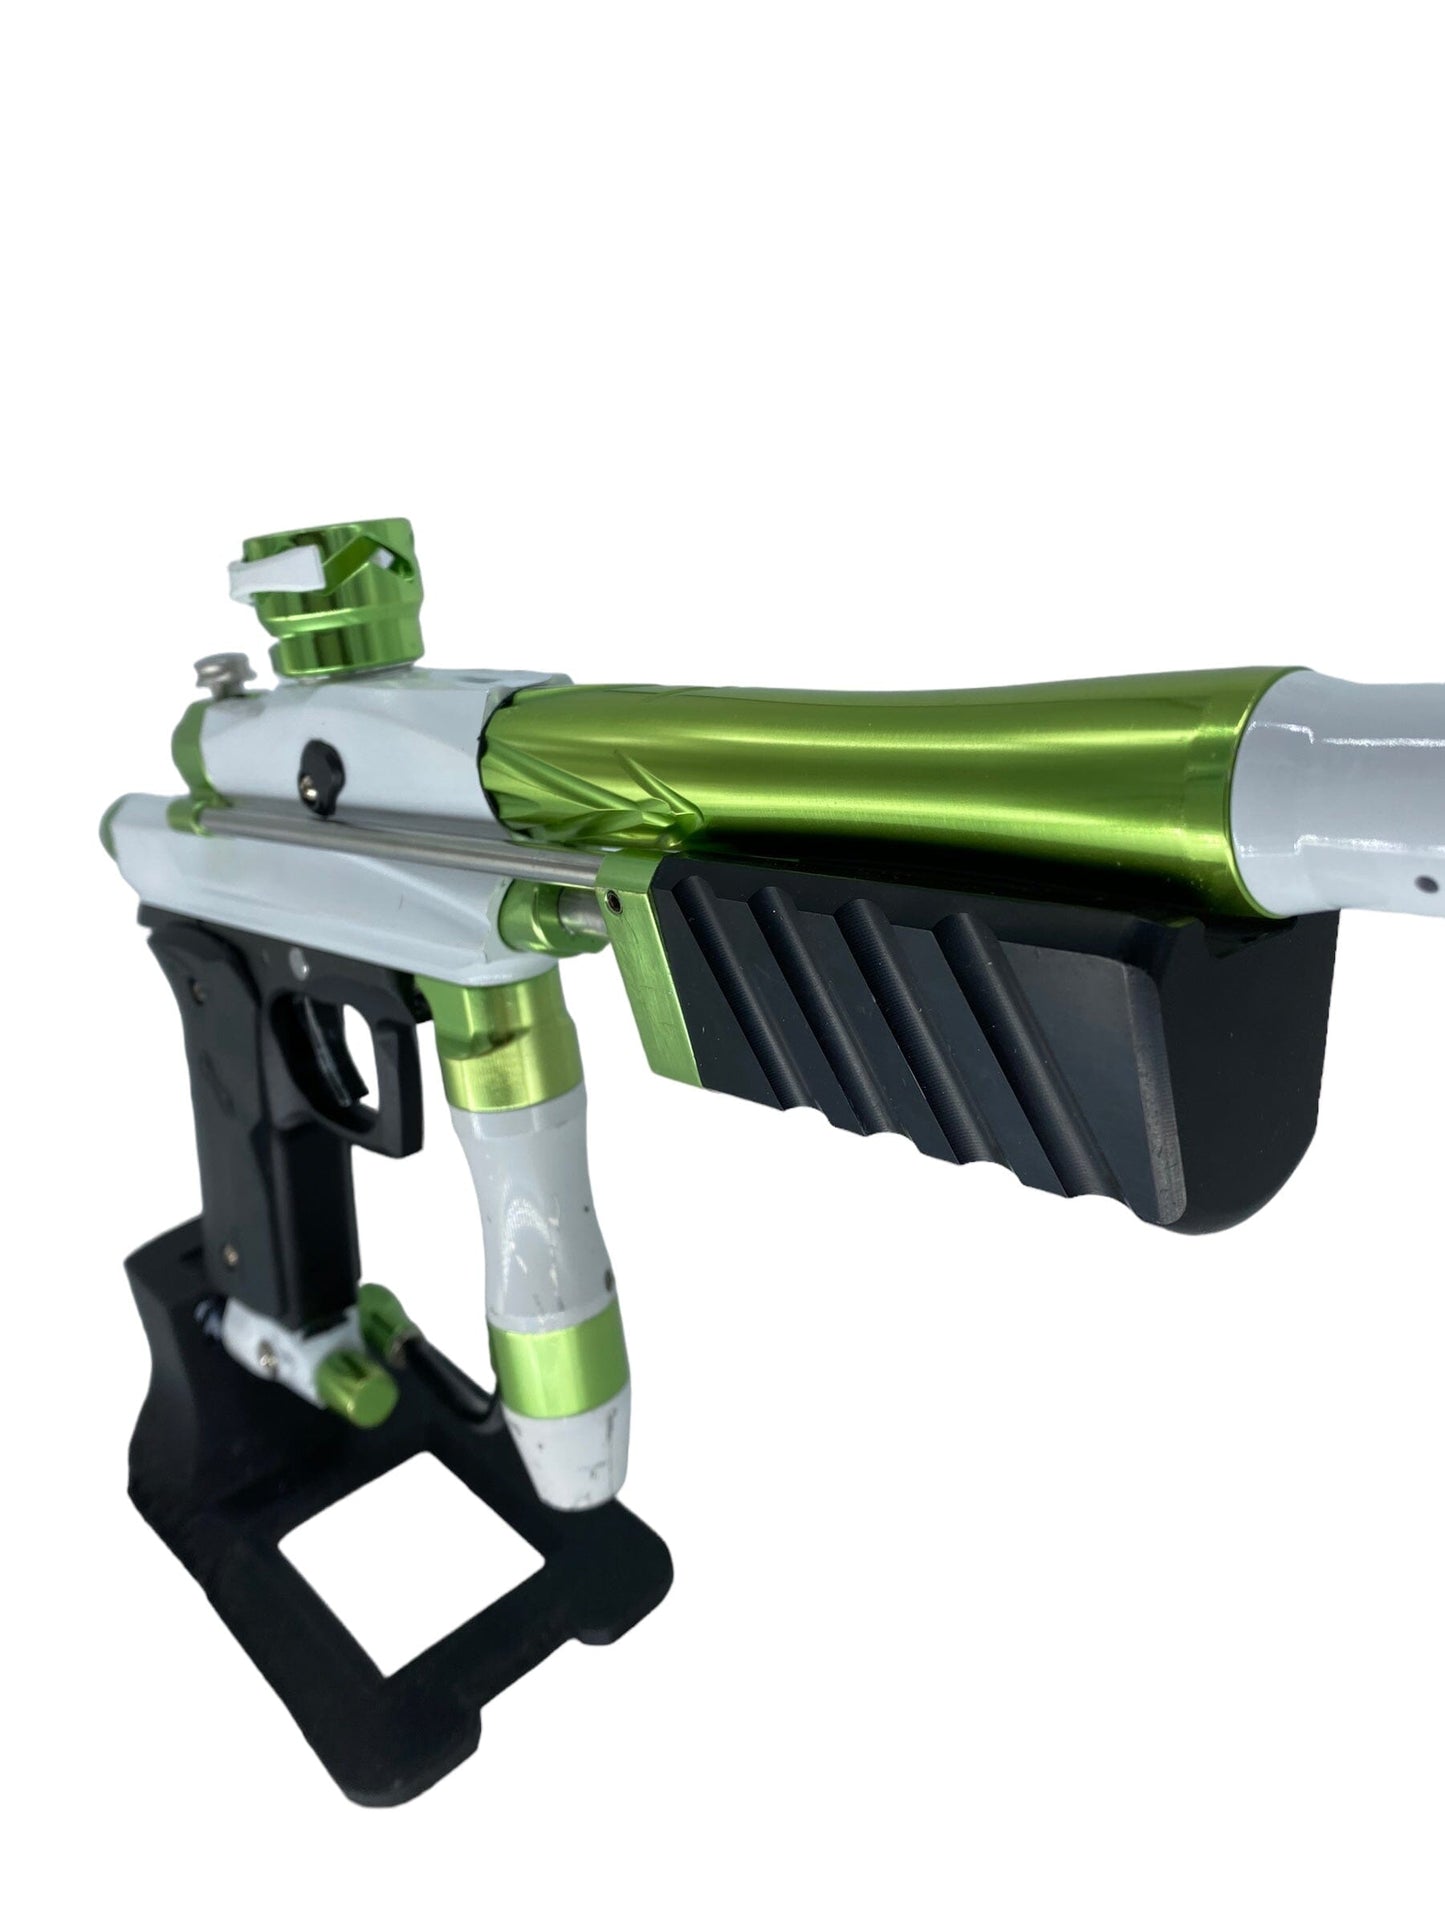 Used Azodin Kp3 Pump Paintball Gun Paintball Gun from CPXBrosPaintball Buy/Sell/Trade Paintball Markers, New Paintball Guns, Paintball Hoppers, Paintball Masks, and Hormesis Headbands